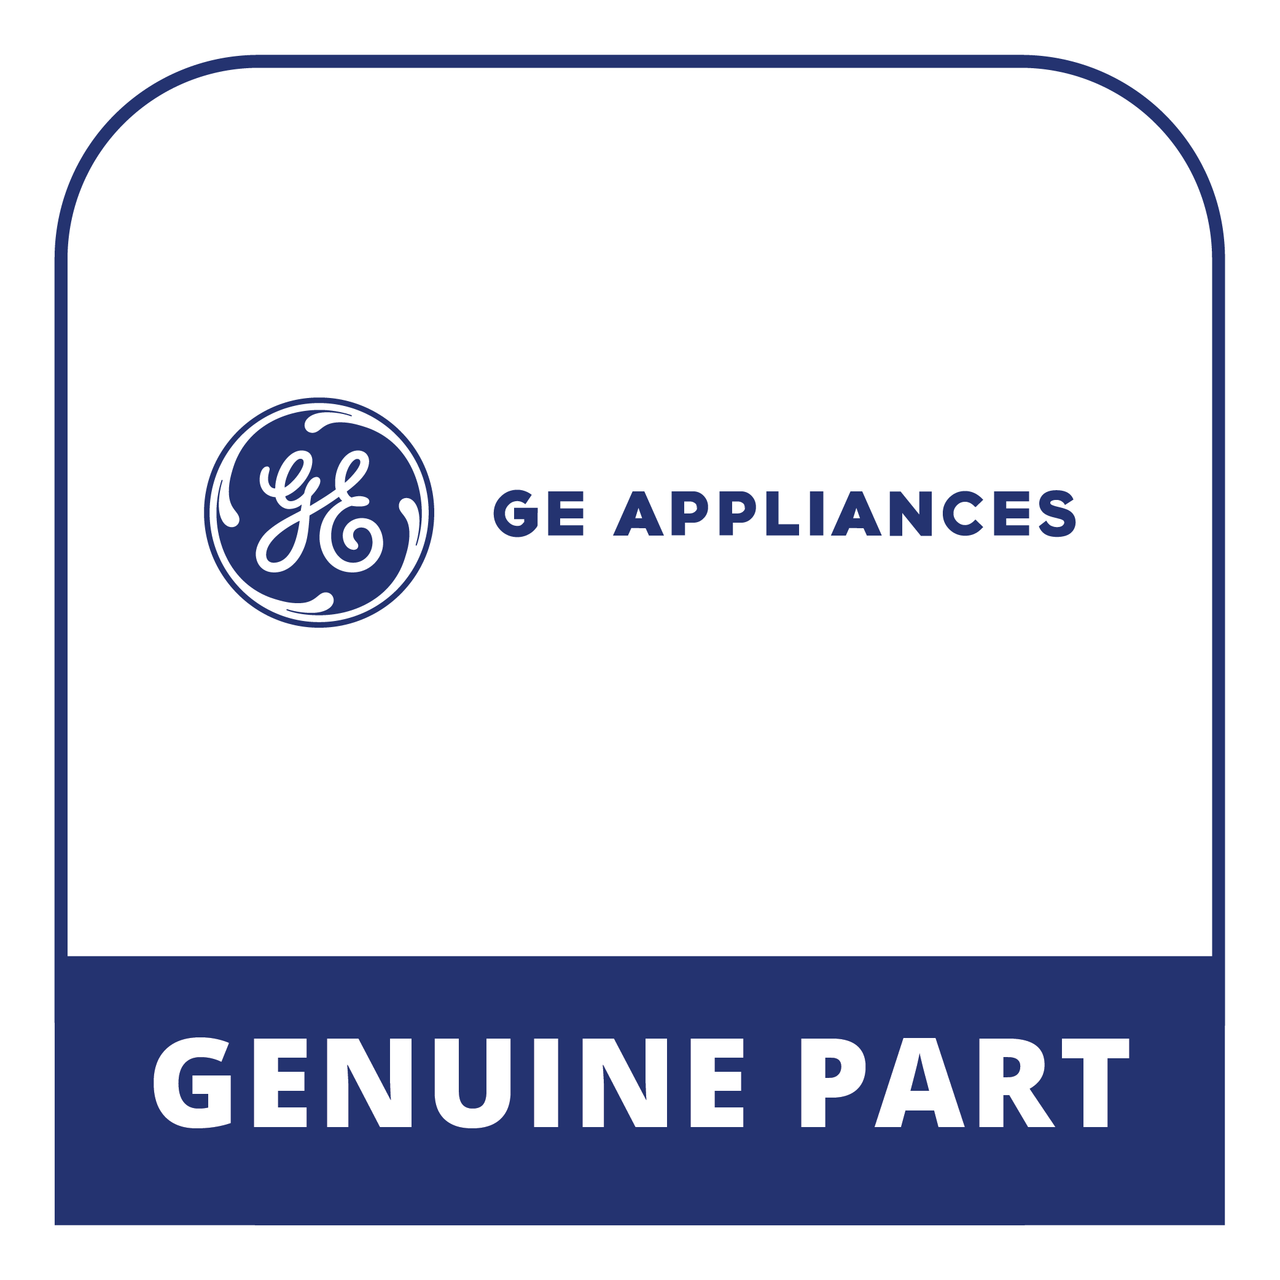 GE Appliances WR01X44229 - Autofill Pitcher Tray - White - Genuine Part